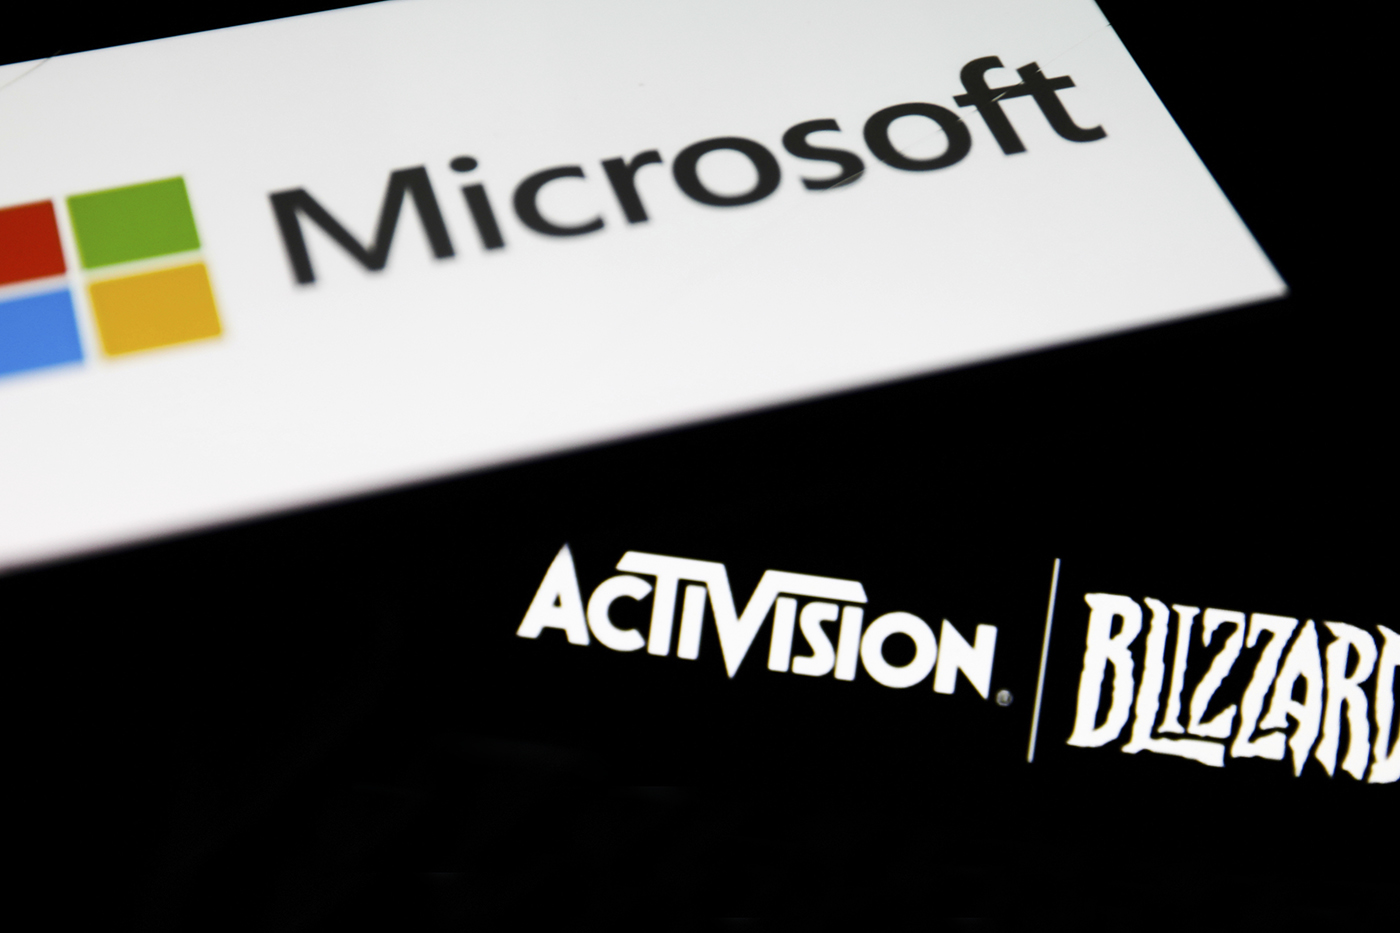 Microsoft's biggest acquisition yet: Game developer Activision